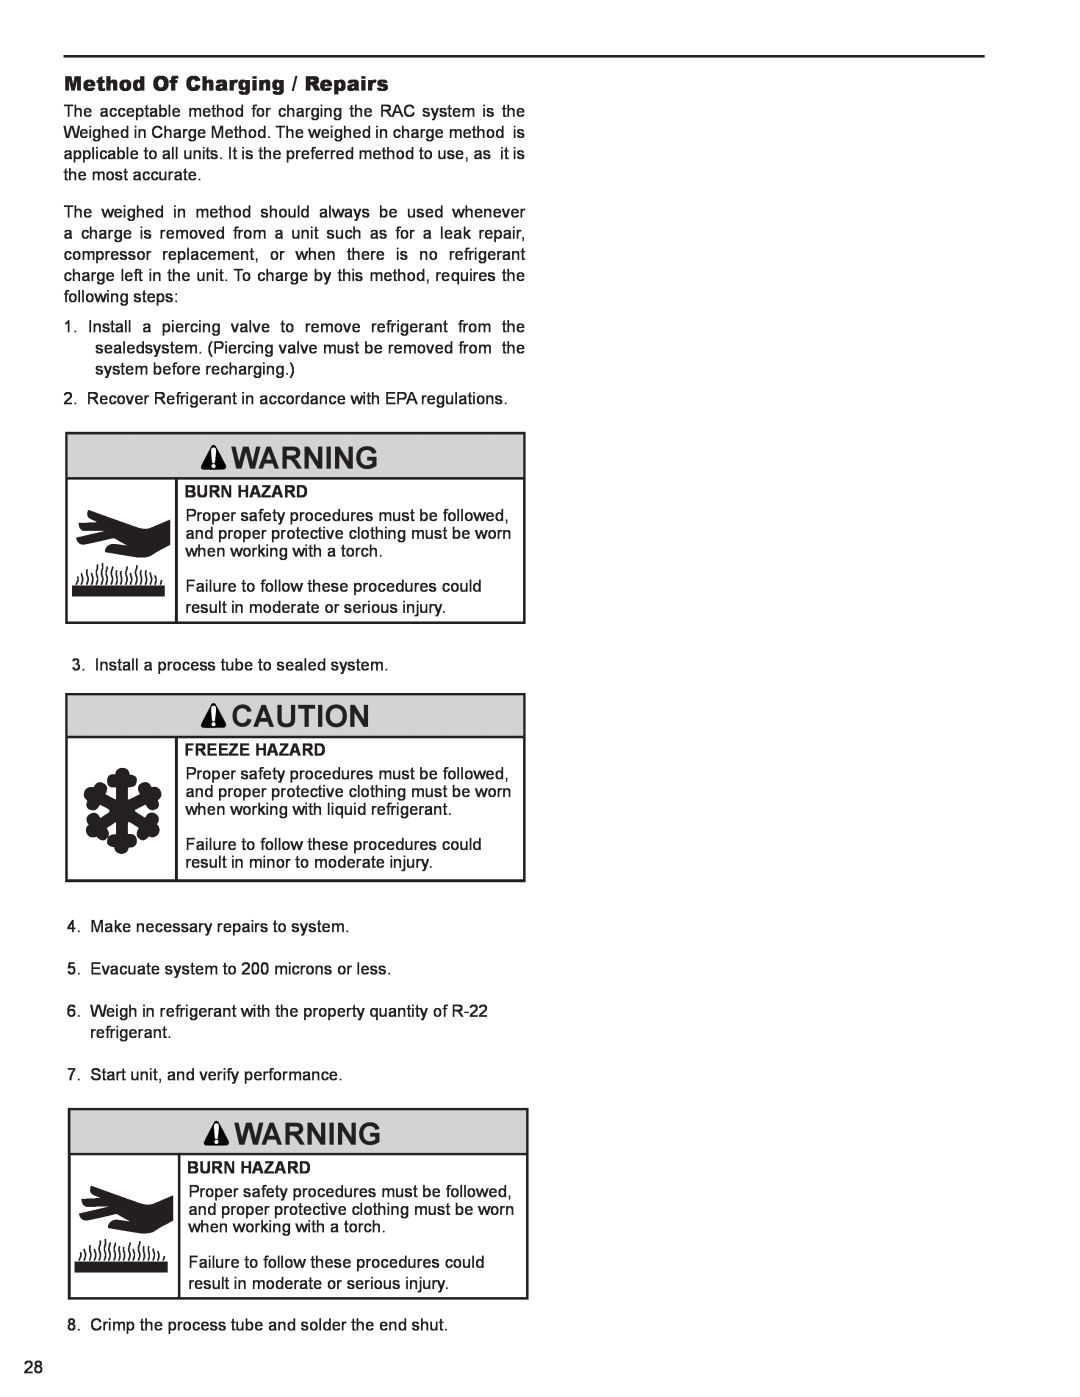 Friedrich 2008, 2009 service manual Method Of Charging / Repairs, Burn Hazard, Freeze Hazard 